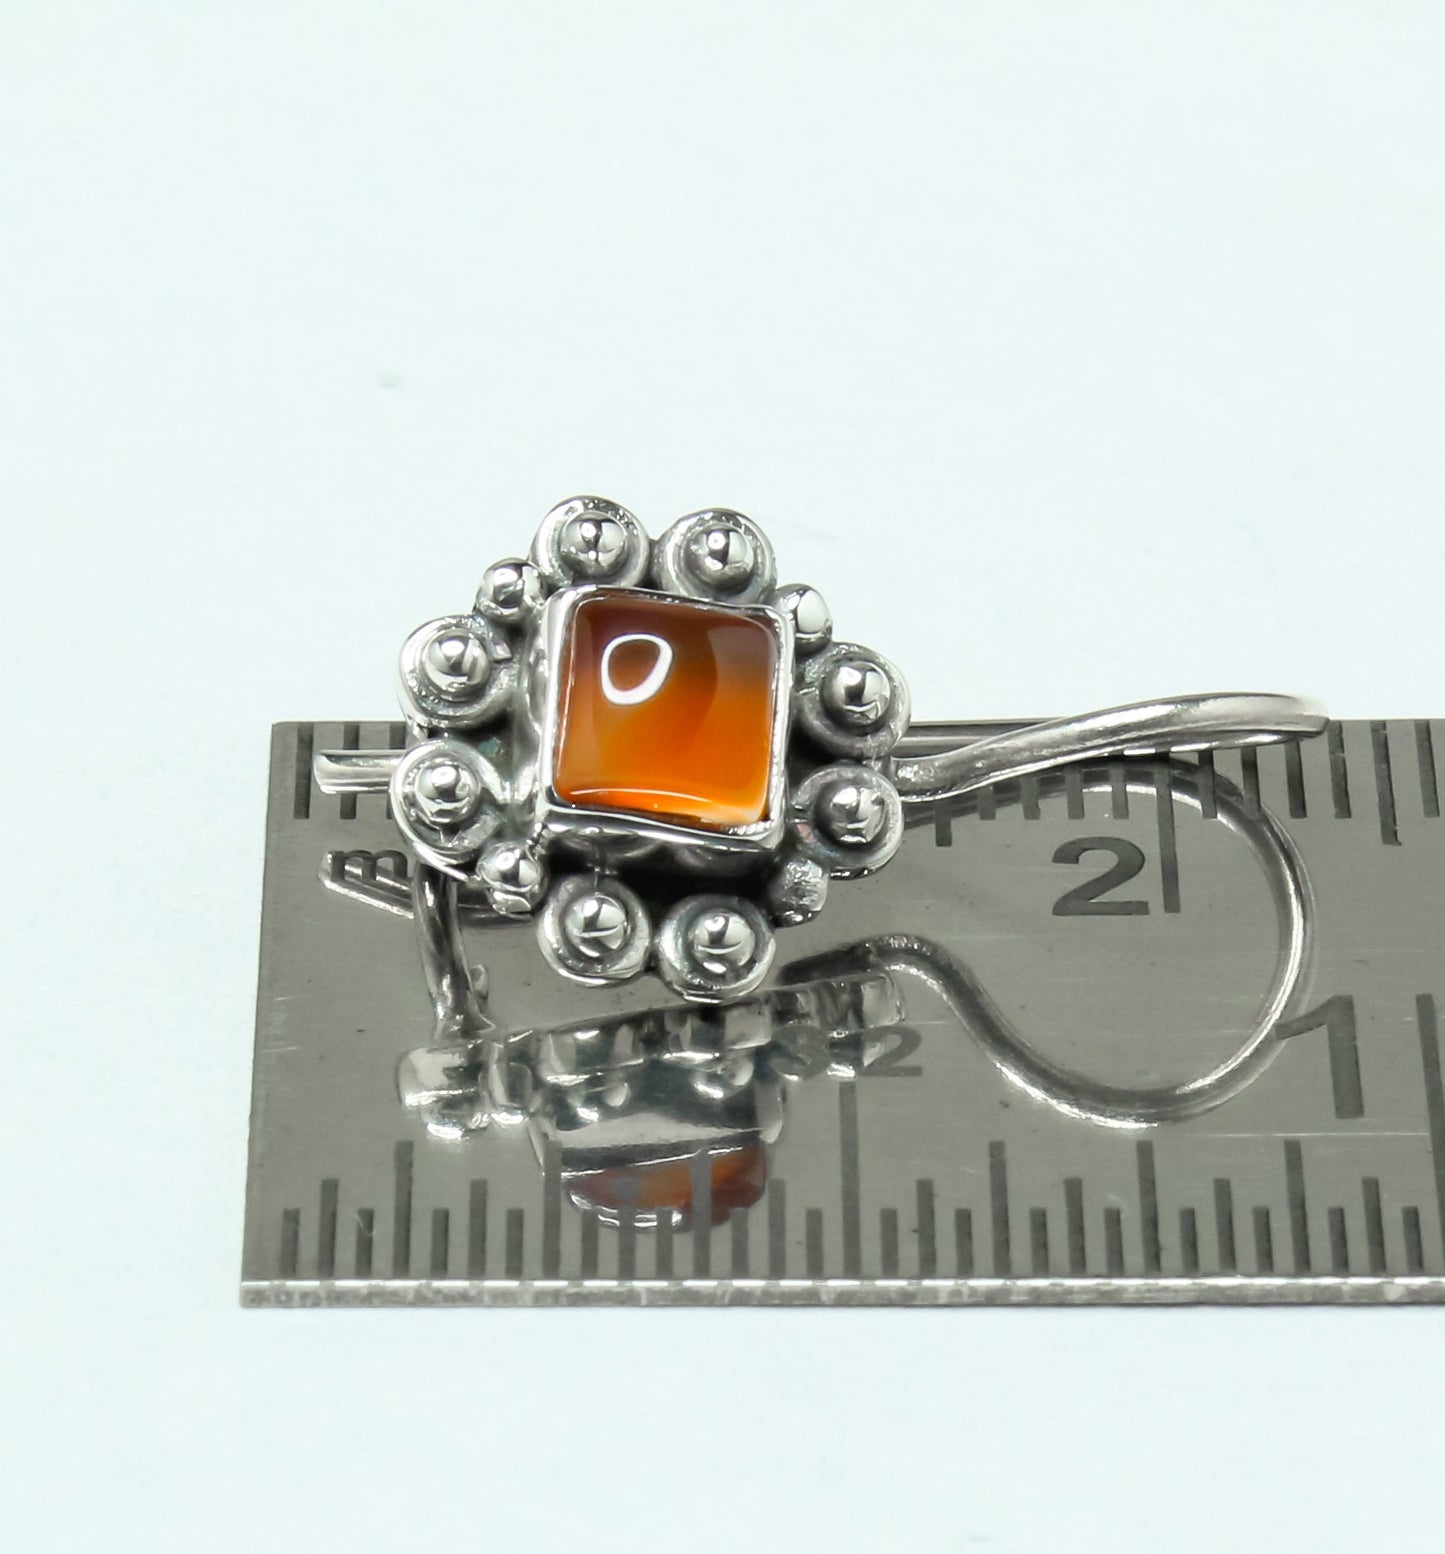 Square CARNELIAN Gems Oxidized SILVER Boho Round Latch-Back Earrings